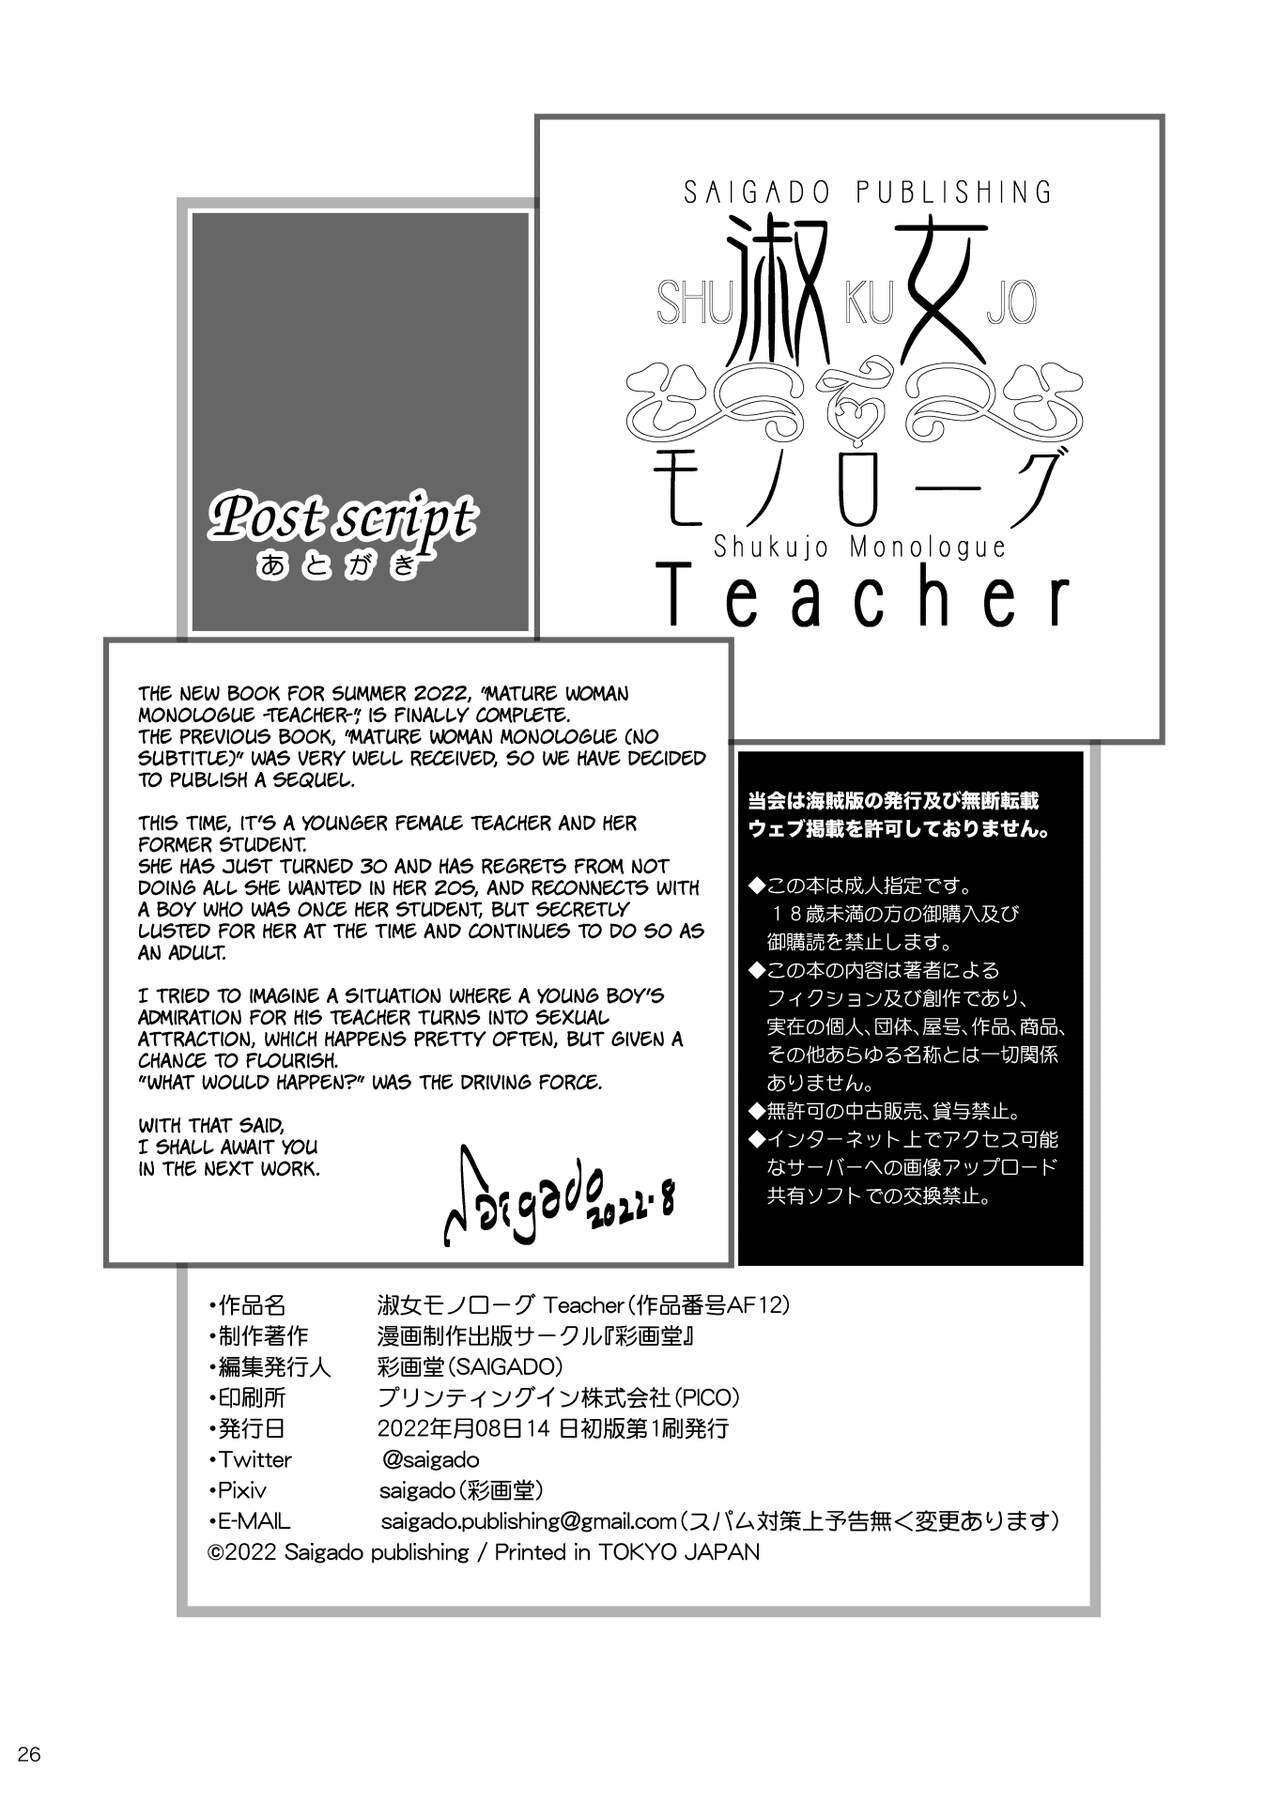 Shukujo Monologue Teacher | Mature Woman Monologue 24